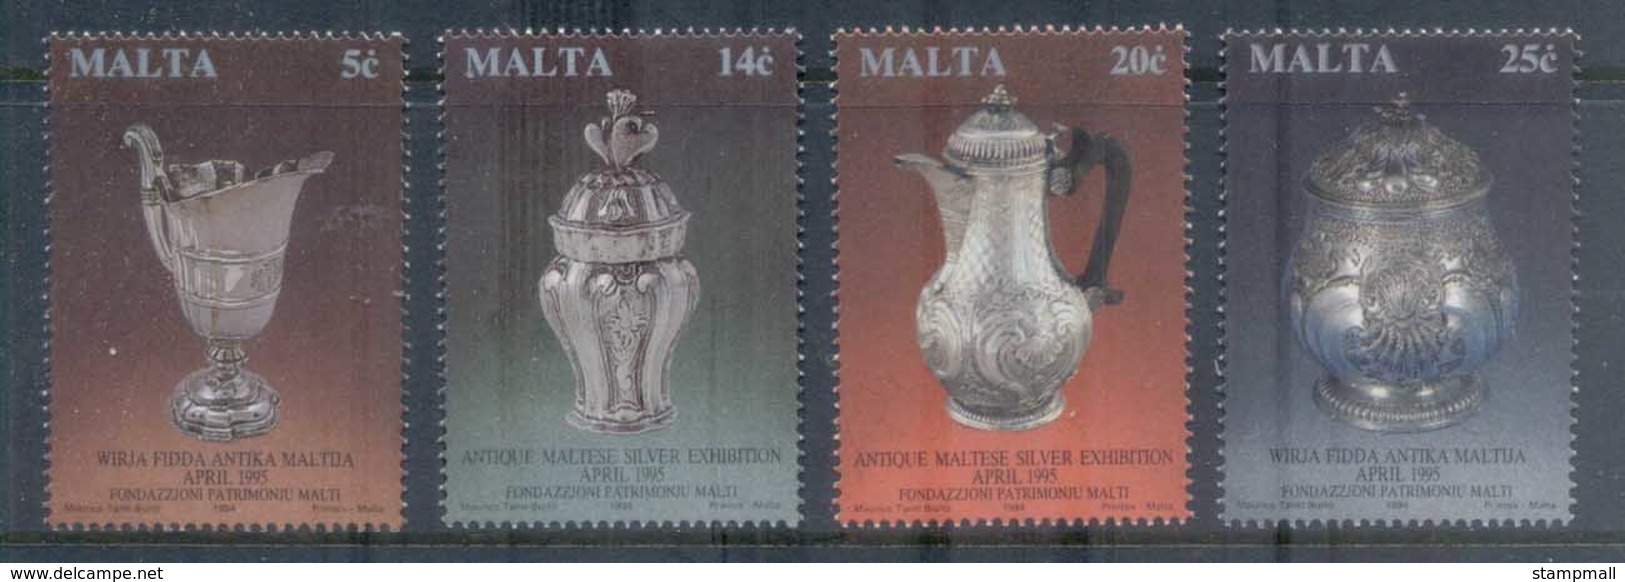 Malta 1994 Antique Silver Exhibition MUH - Malta